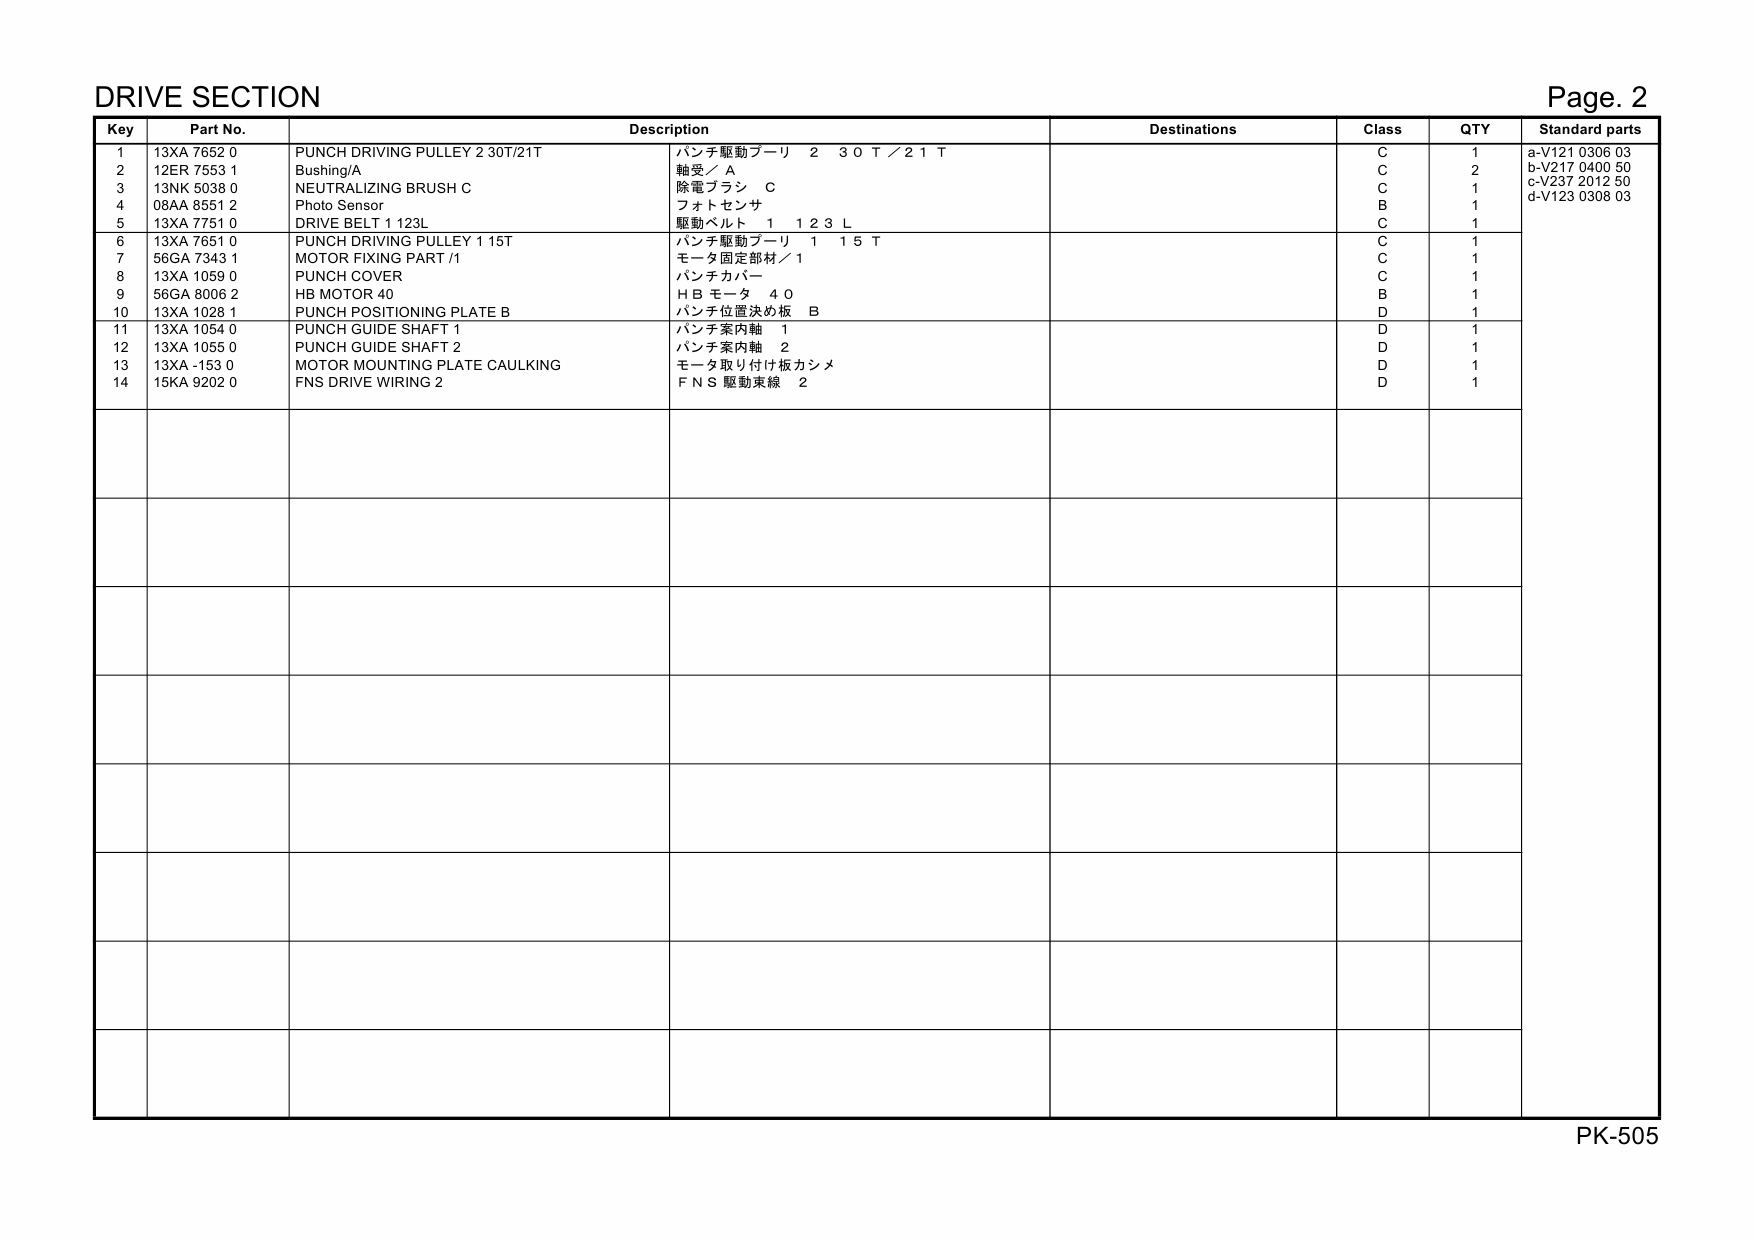 Konica-Minolta Options PK-505 15UT Parts Manual-5